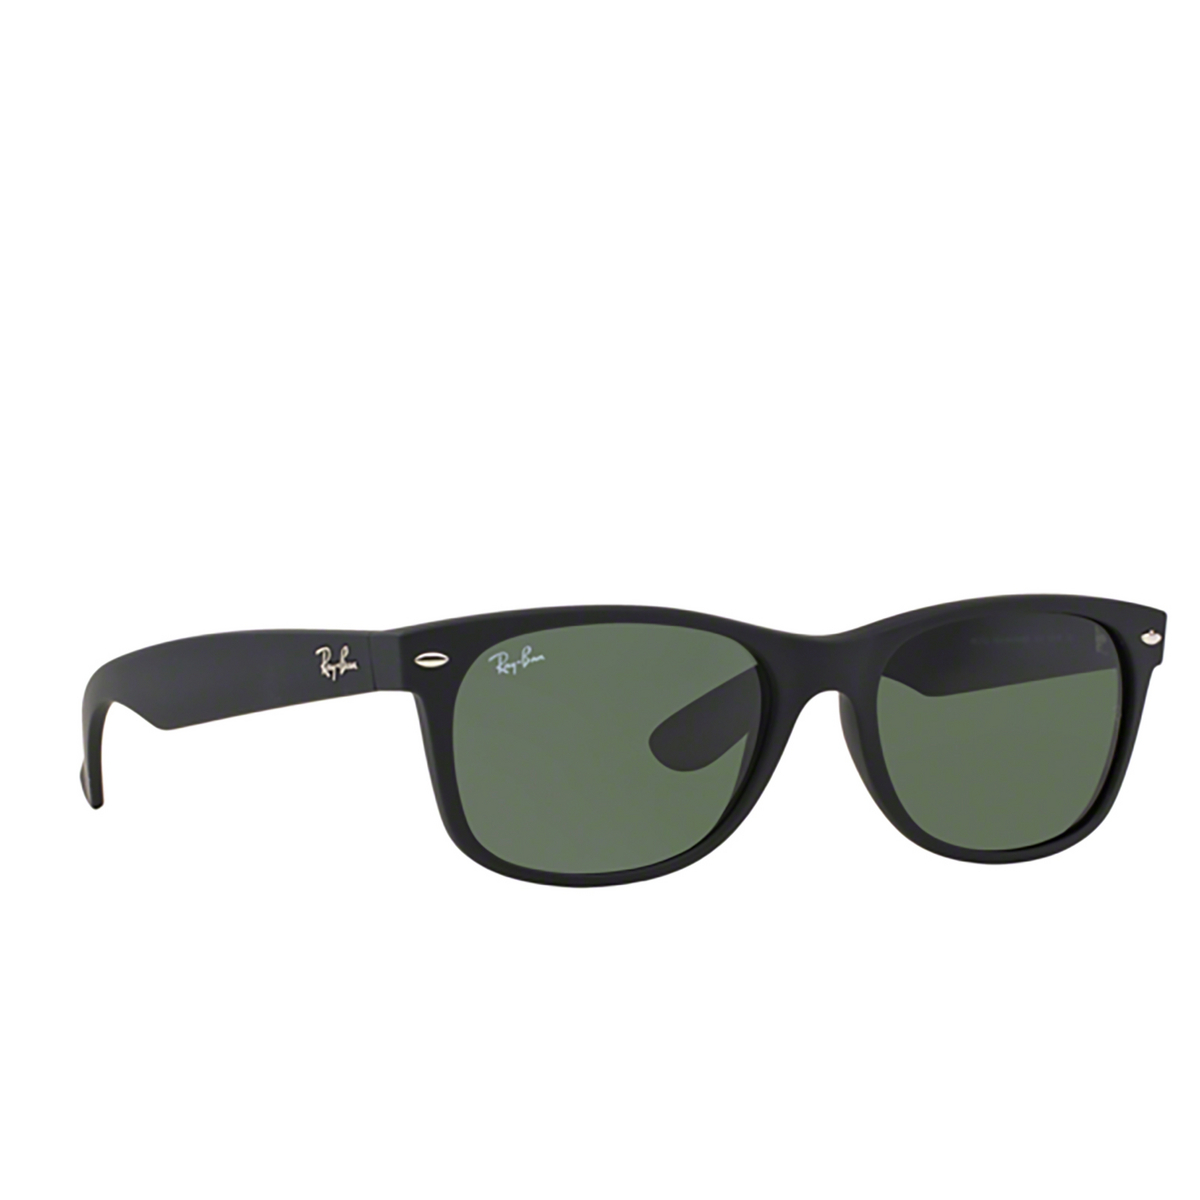 Ray-Ban NEW WAYFARER Sunglasses 622 RUBBER BLACK - three-quarters view